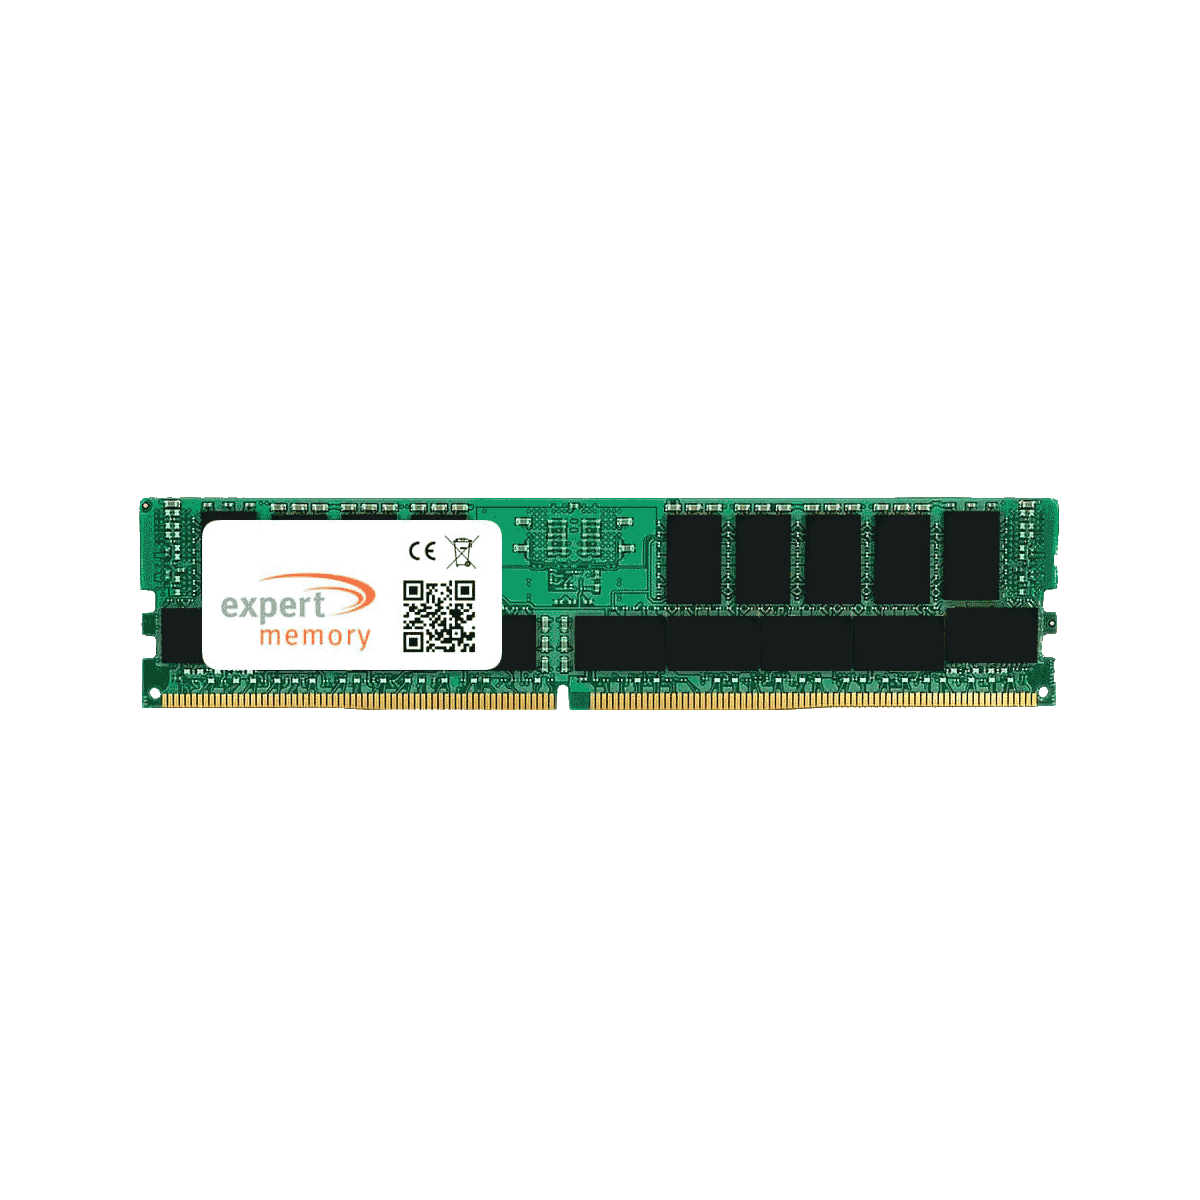 RAM Server GB 2933 EXPERT RX2520 Memory DDR4 MEMORY 64GB Primergy Upgrade LRDIMM M5 Fujitsu 64 2Rx4